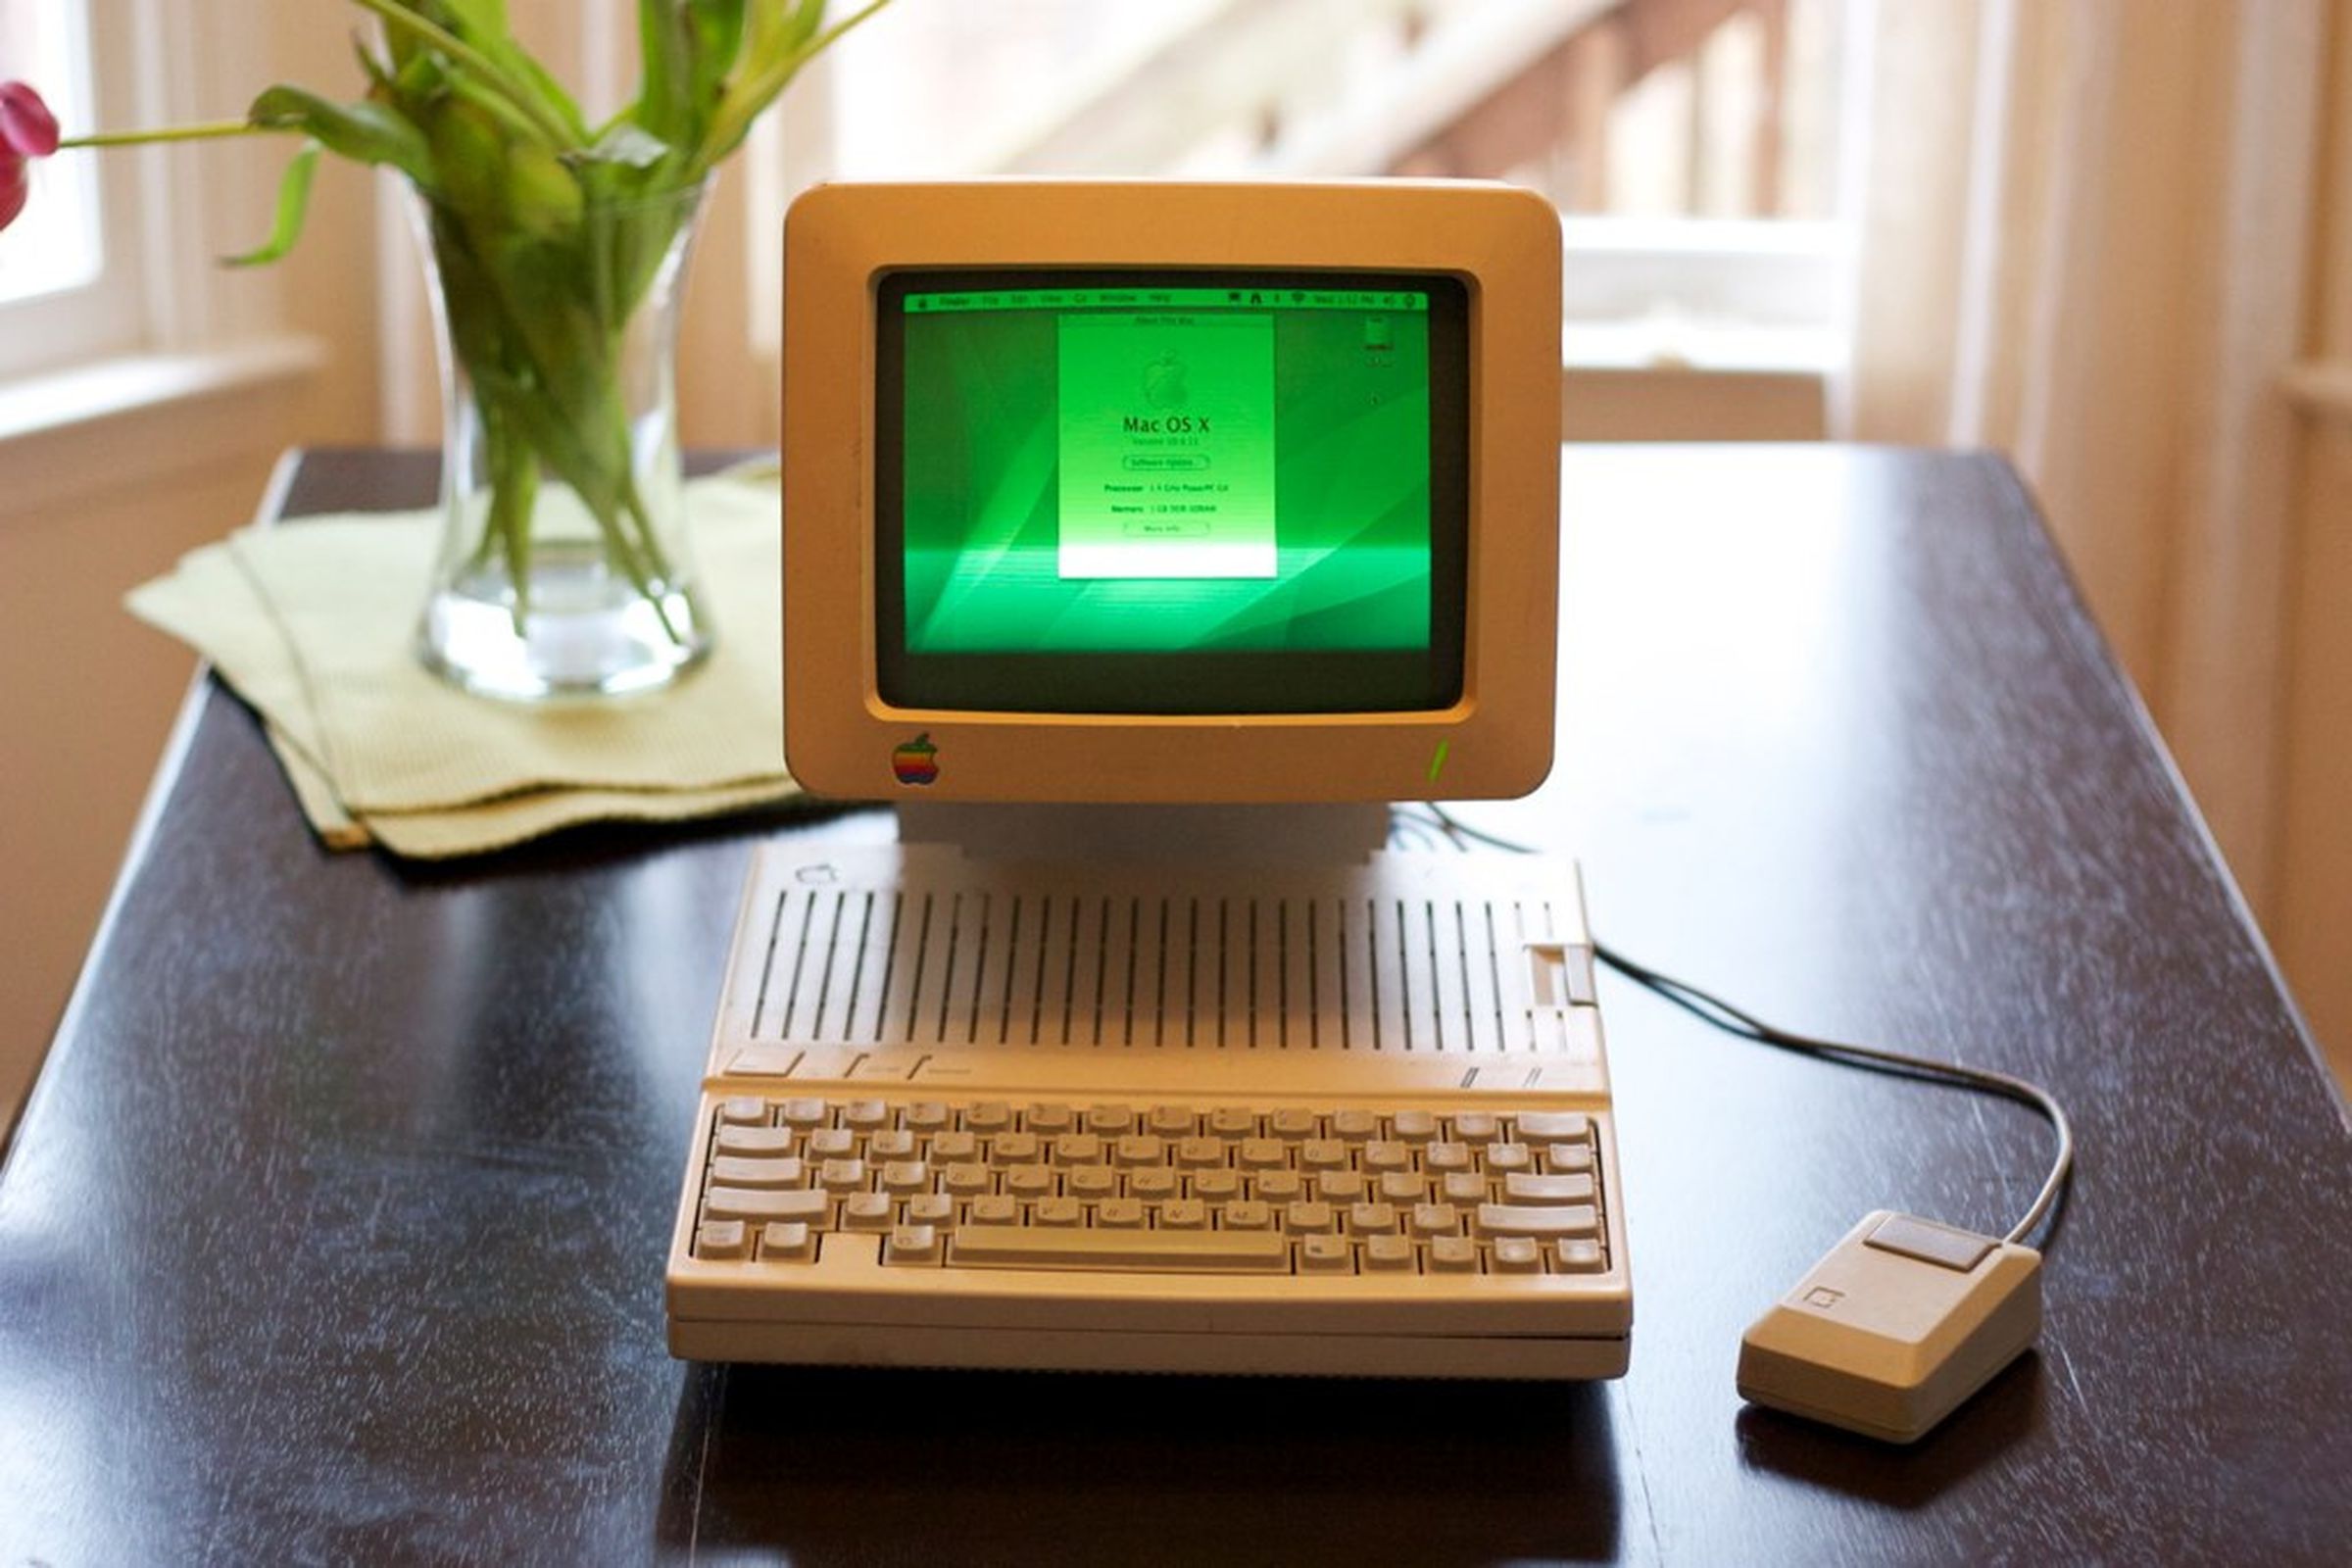 Apple IIc G4 Flickr